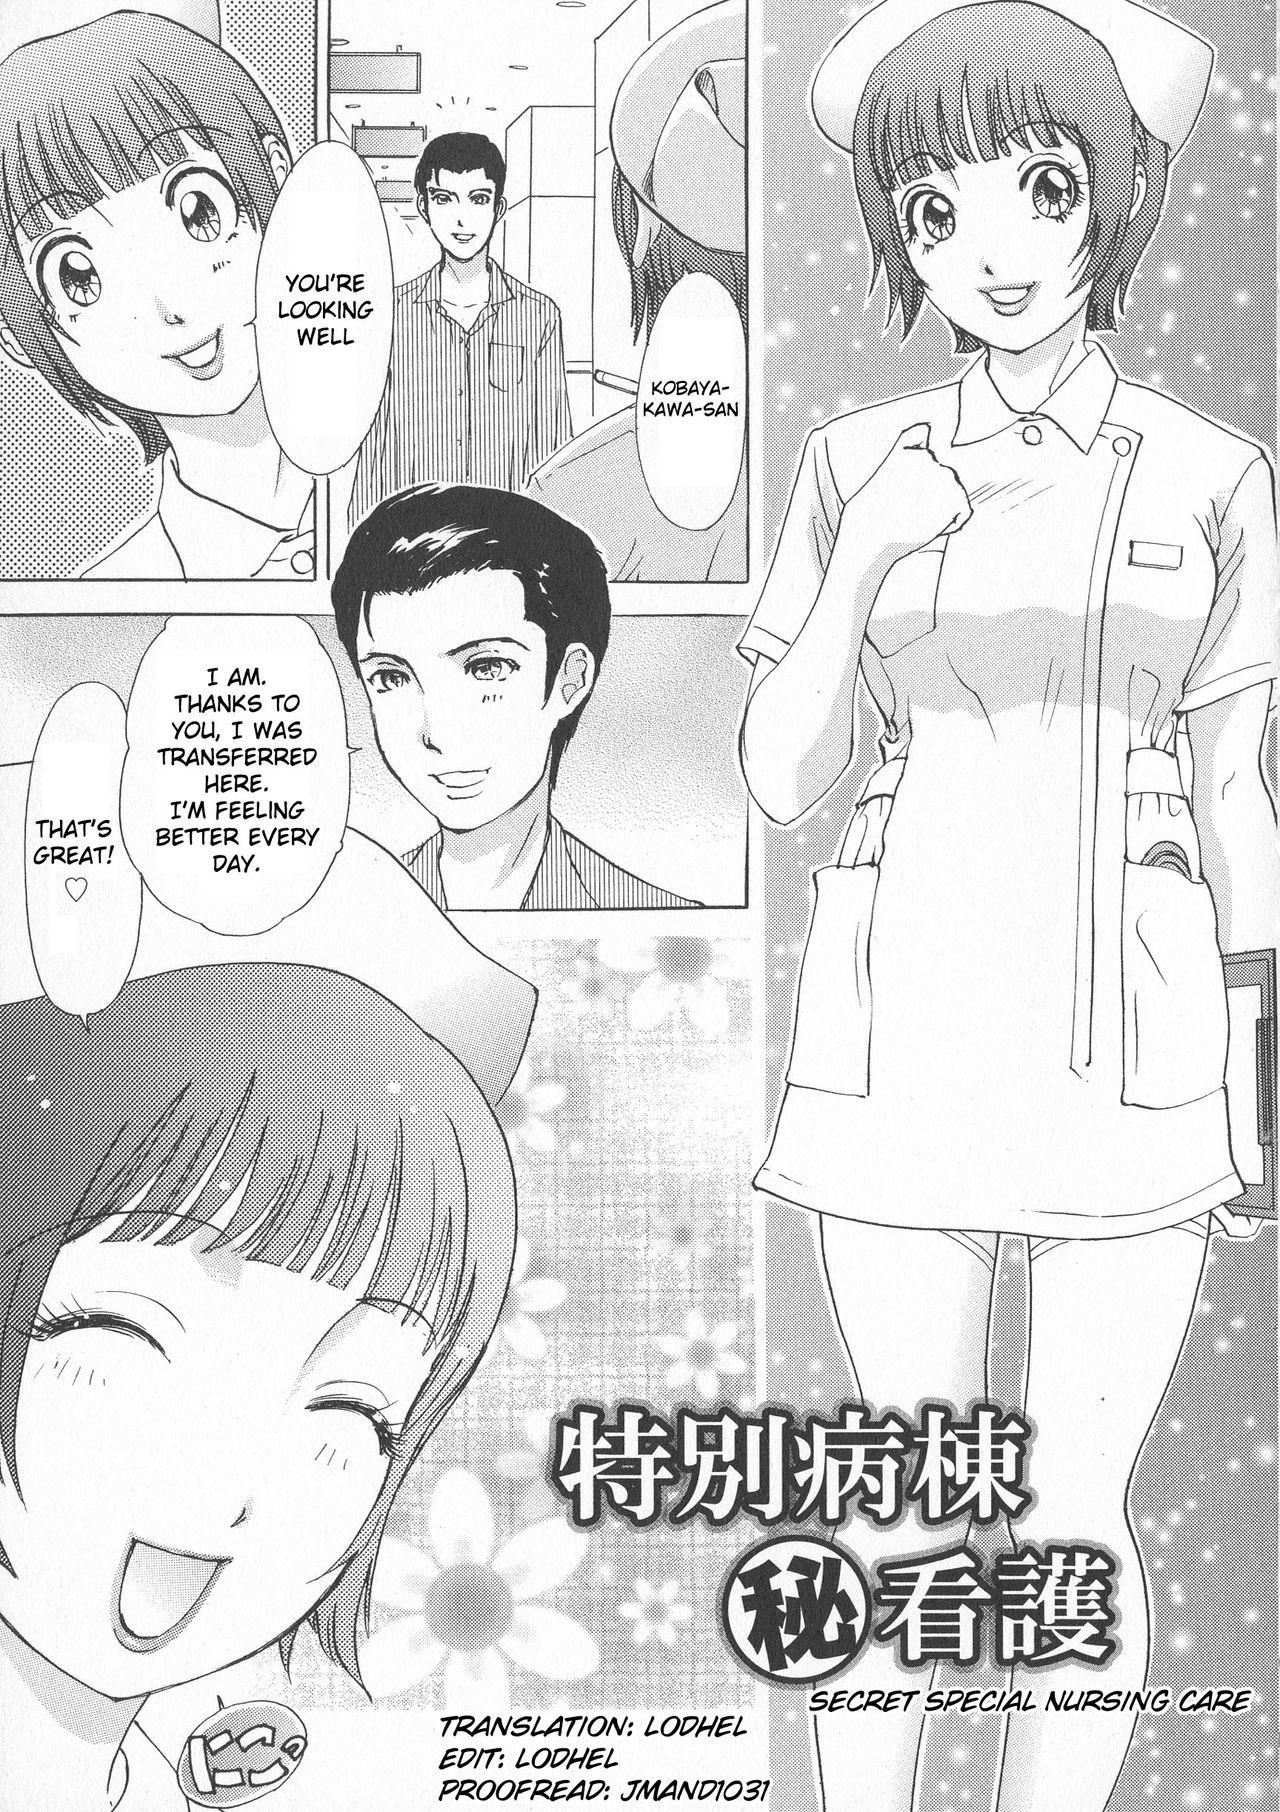 Hentai: Tokubetsu byoutou hi kango Secret Special Nursing Care.